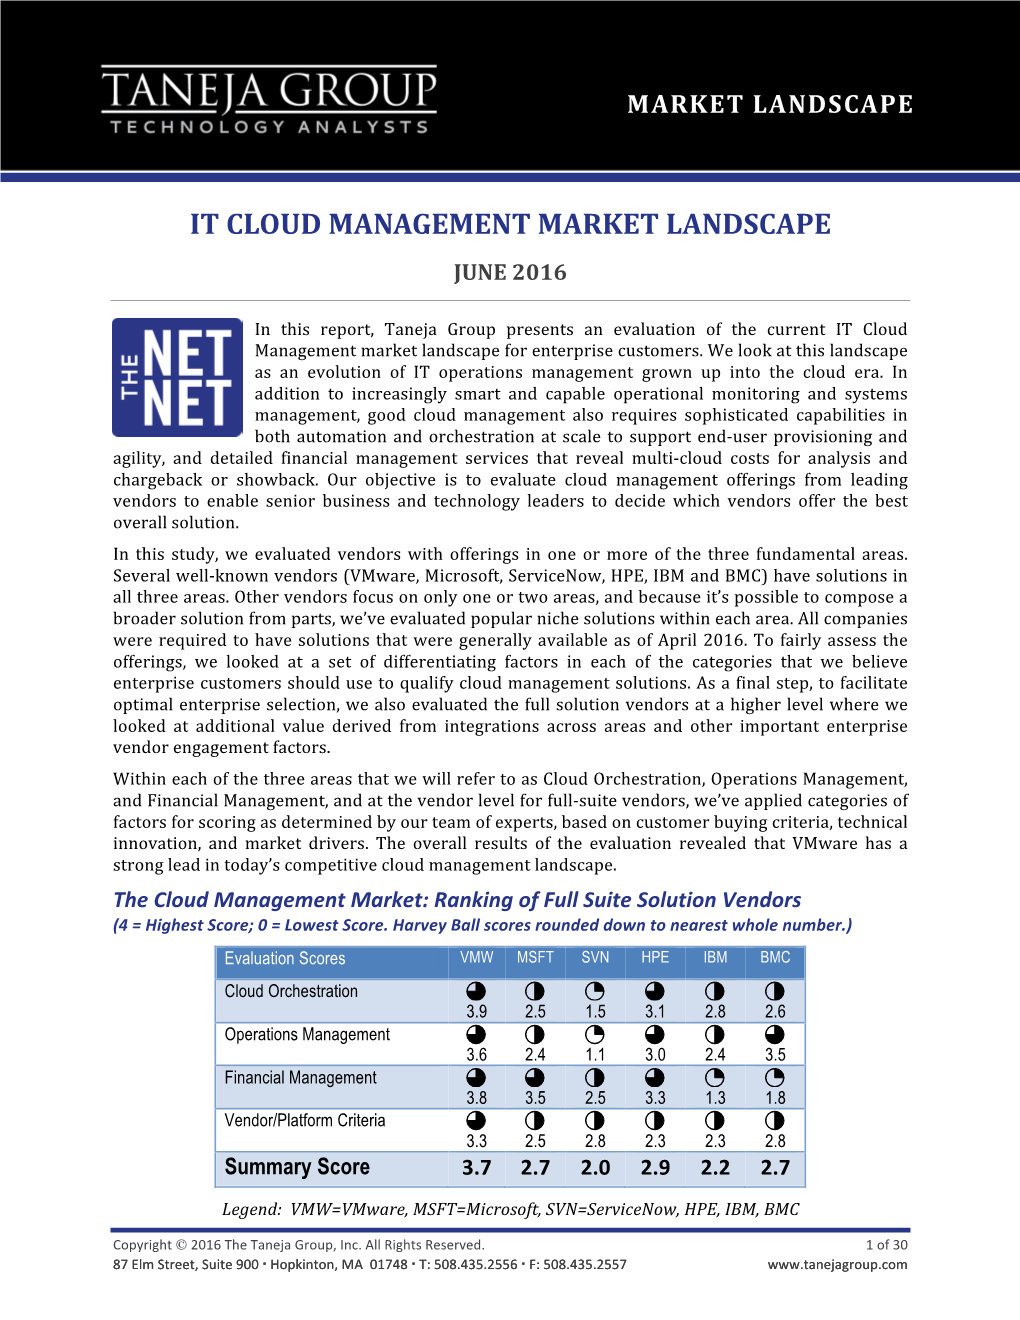 Taneja Group Presents an Evaluation of the Current IT Cloud Management Market Landscape for Enterprise Customers